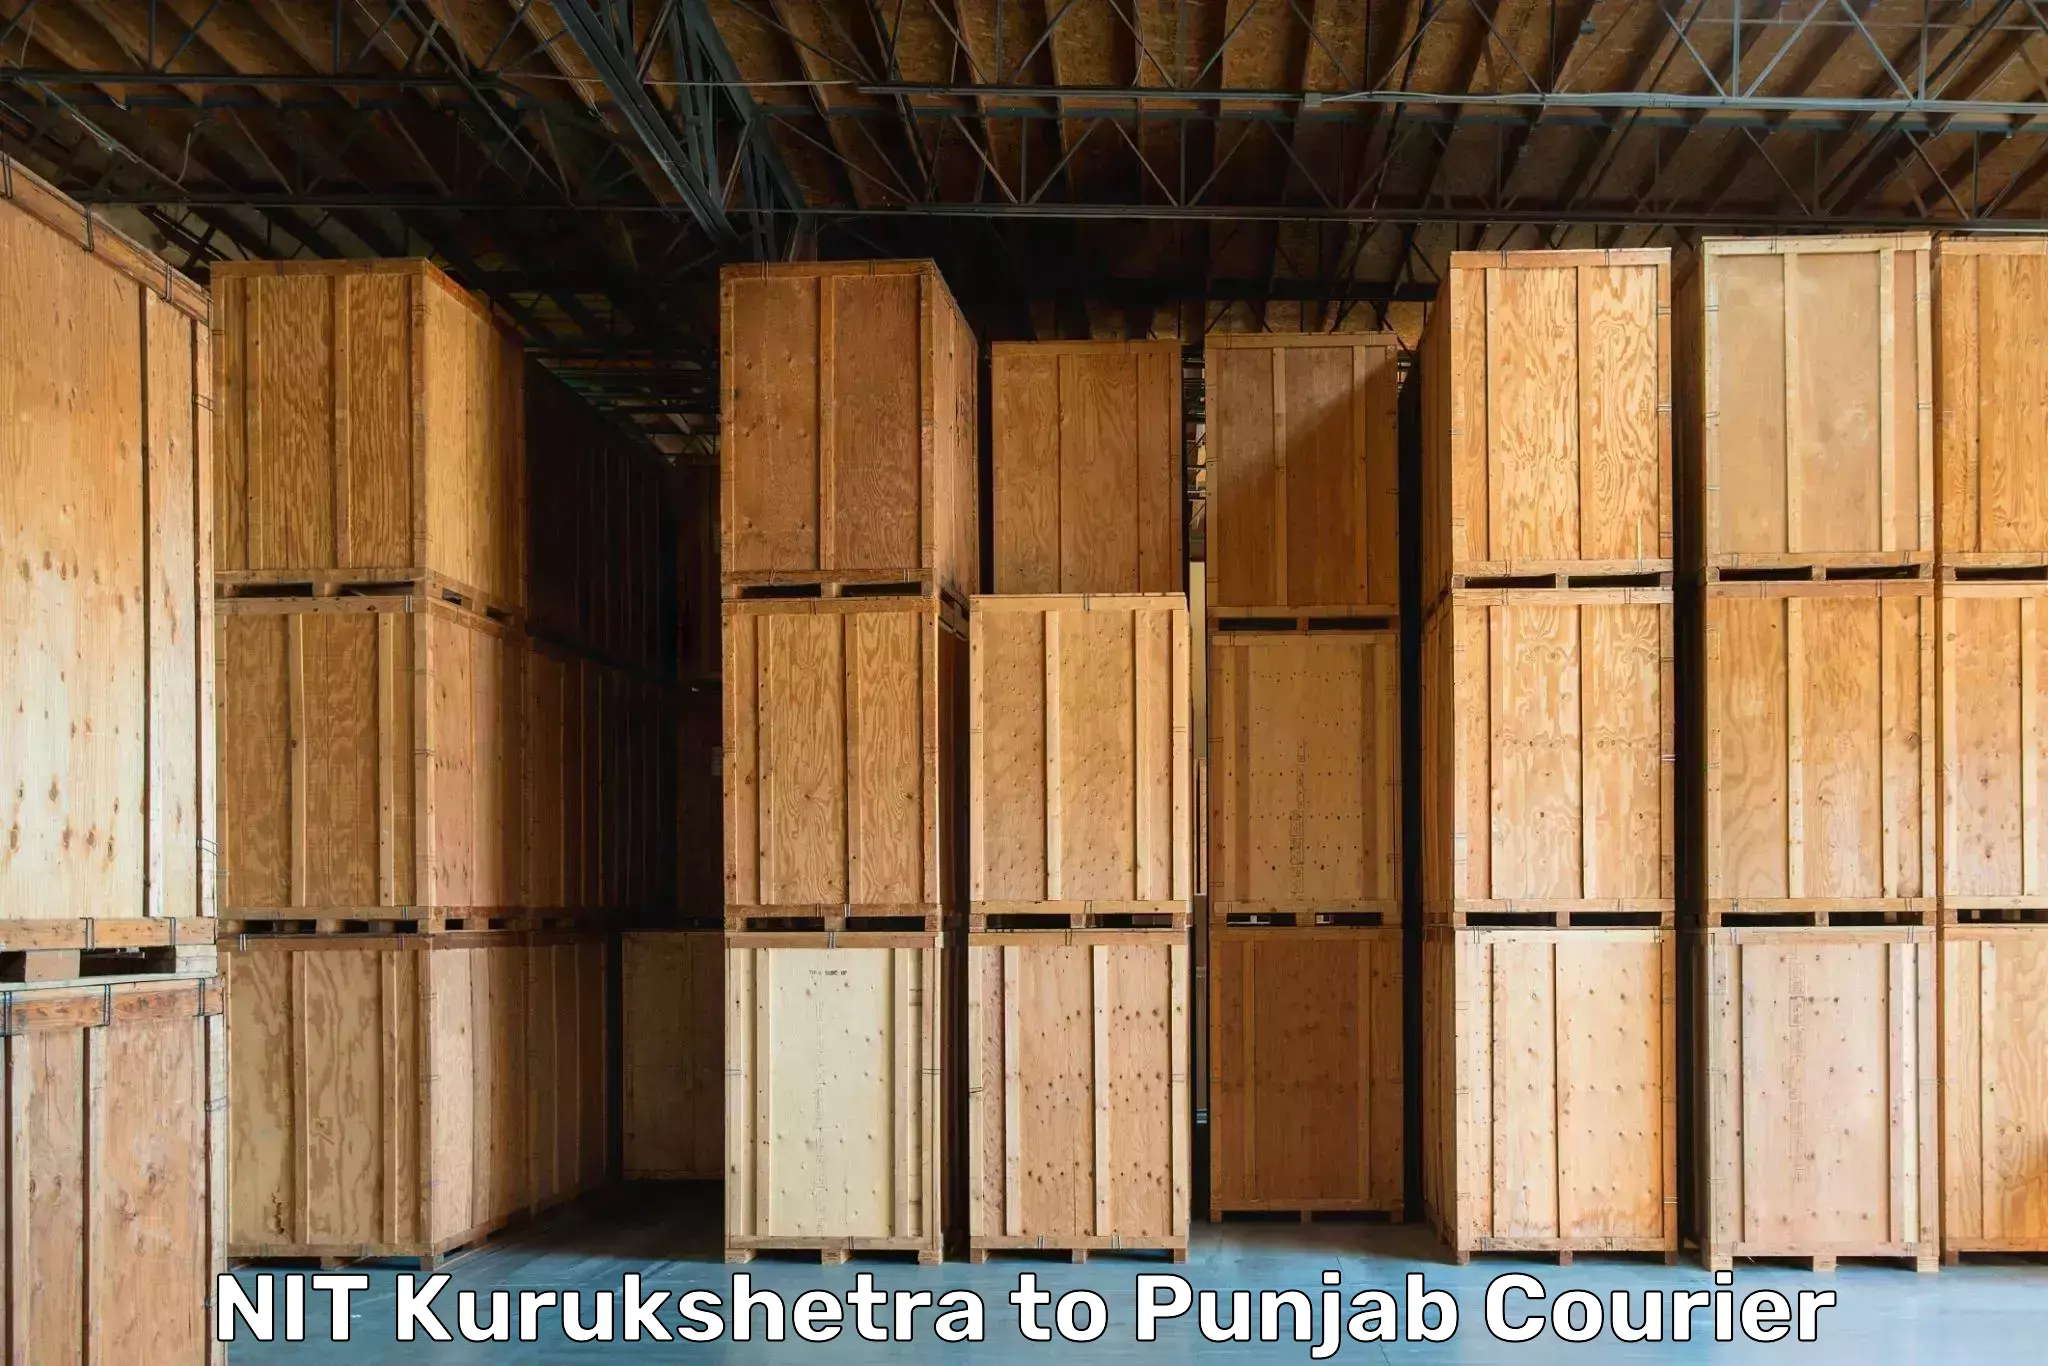 Trusted moving company NIT Kurukshetra to Gurdaspur